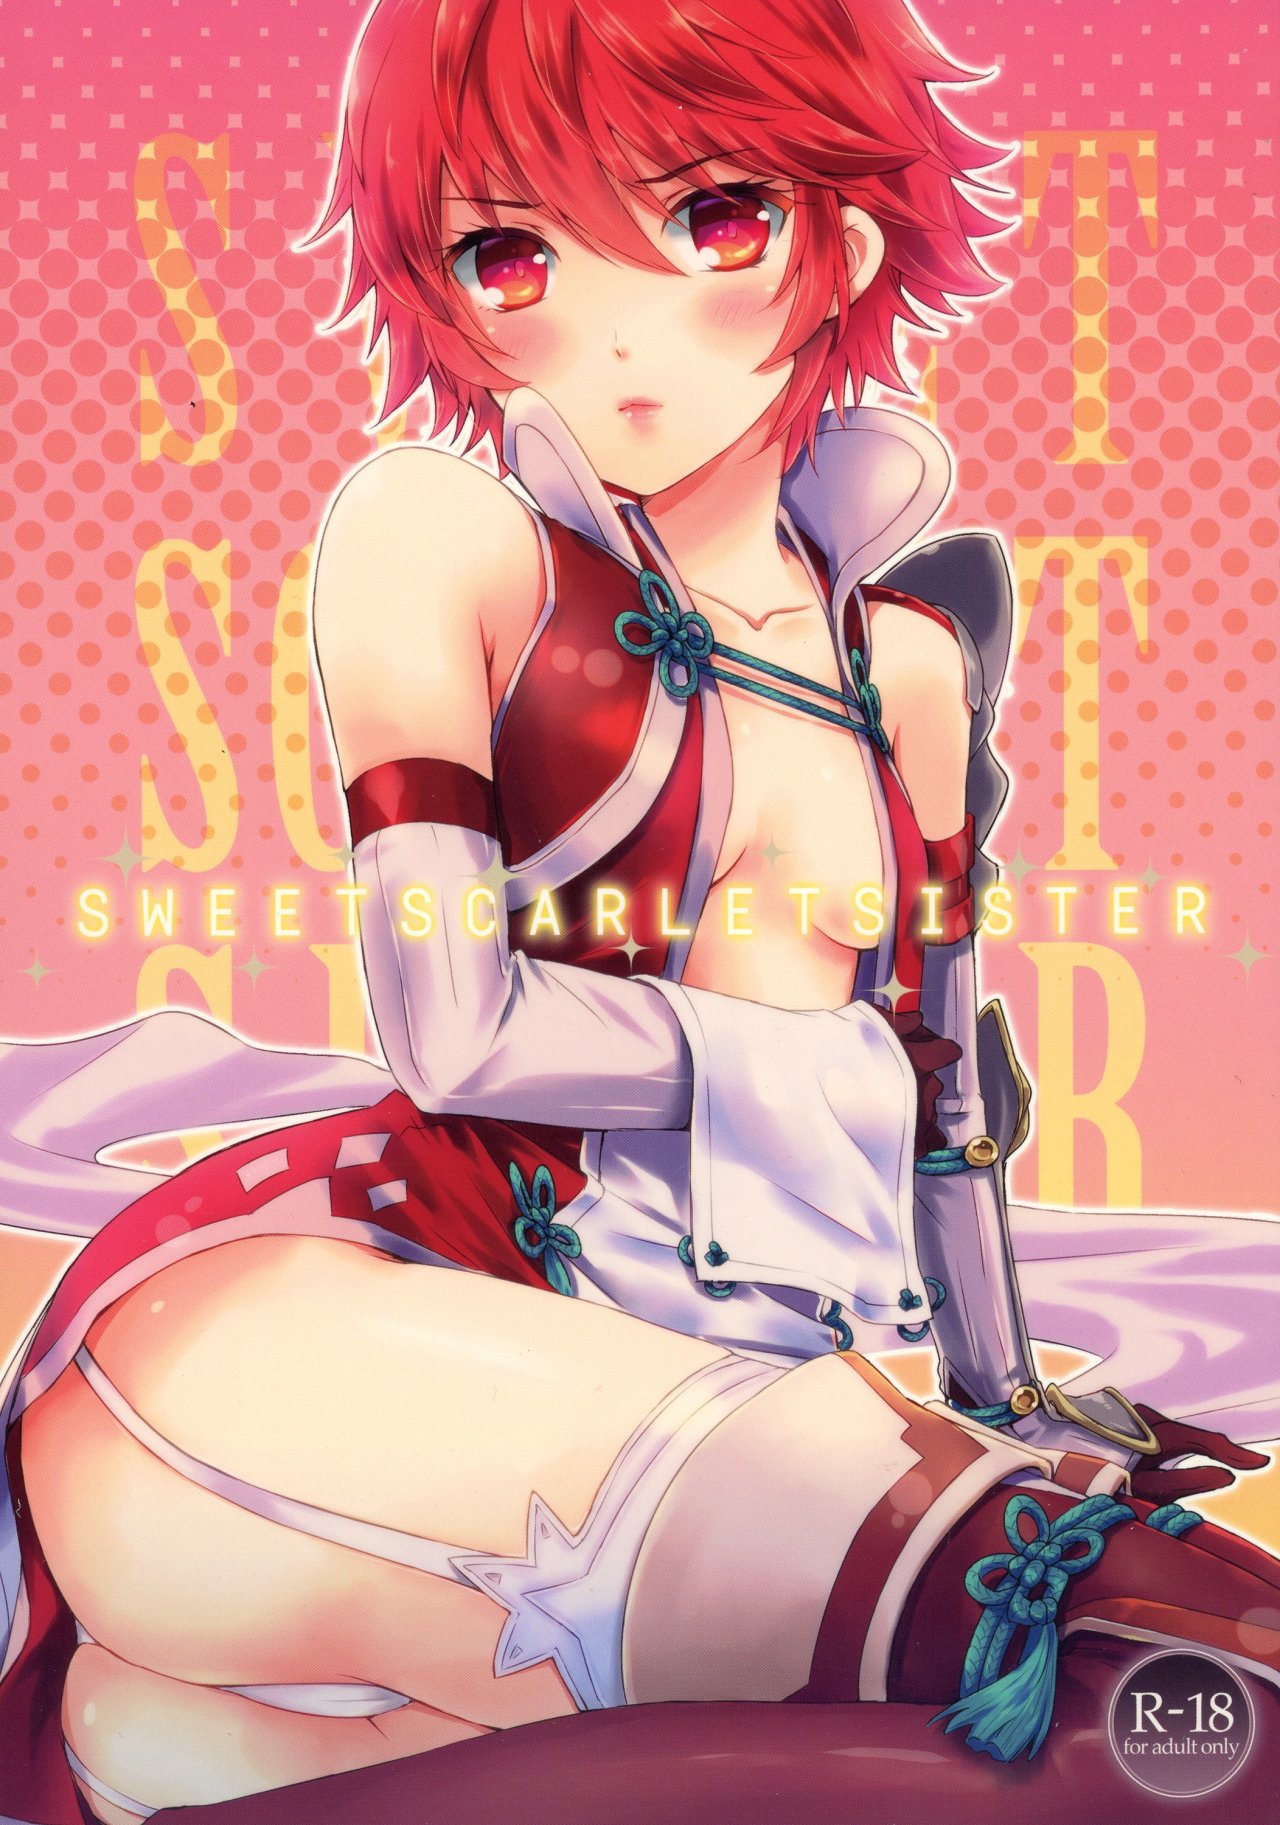 Sweet Scarlet Sister (Fire Emblem Fates) - 0